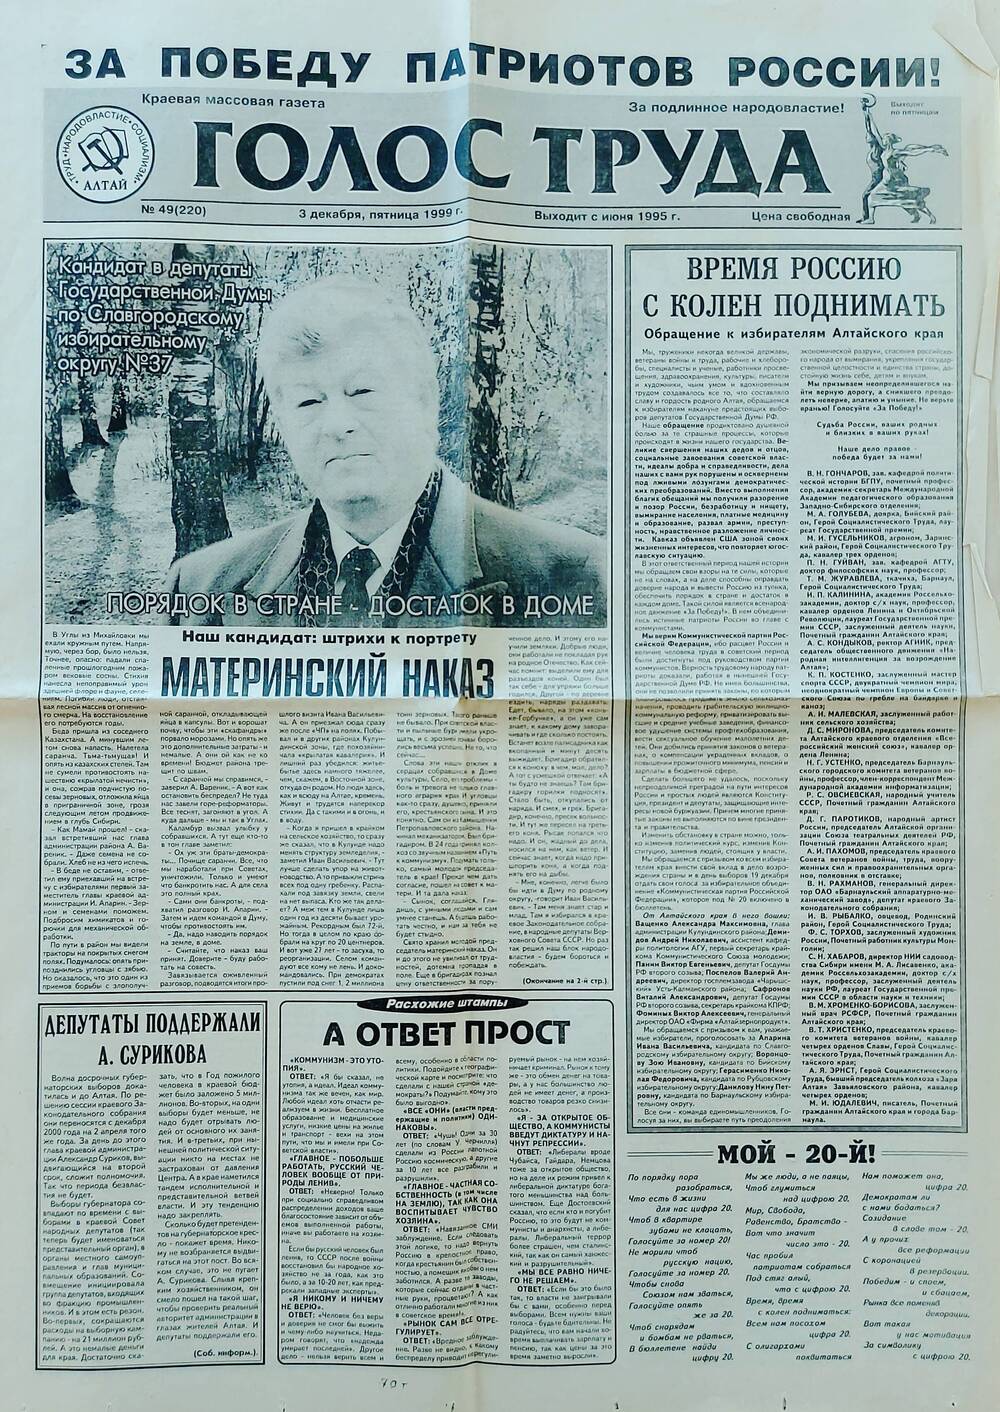 Газета Голос Труда № 49 (220) от 03.12.1999 г. ГИПП Алтай.